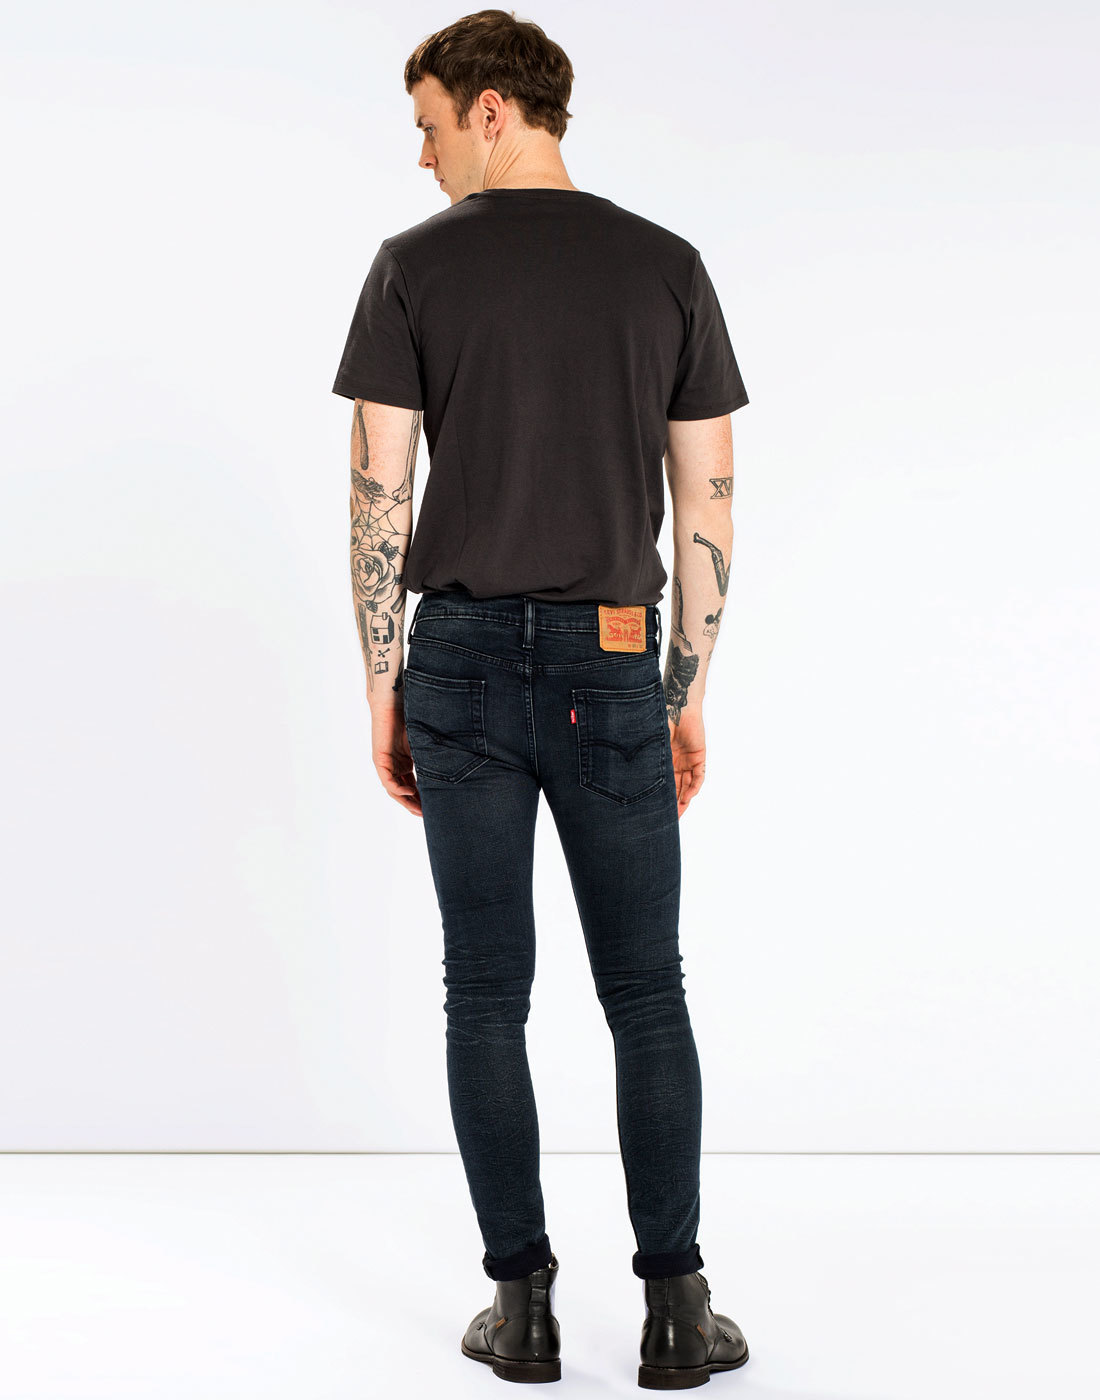 LEVI'S® 519 Retro Mod Extreme Skinny Fit Denim Jeans in Sharkley